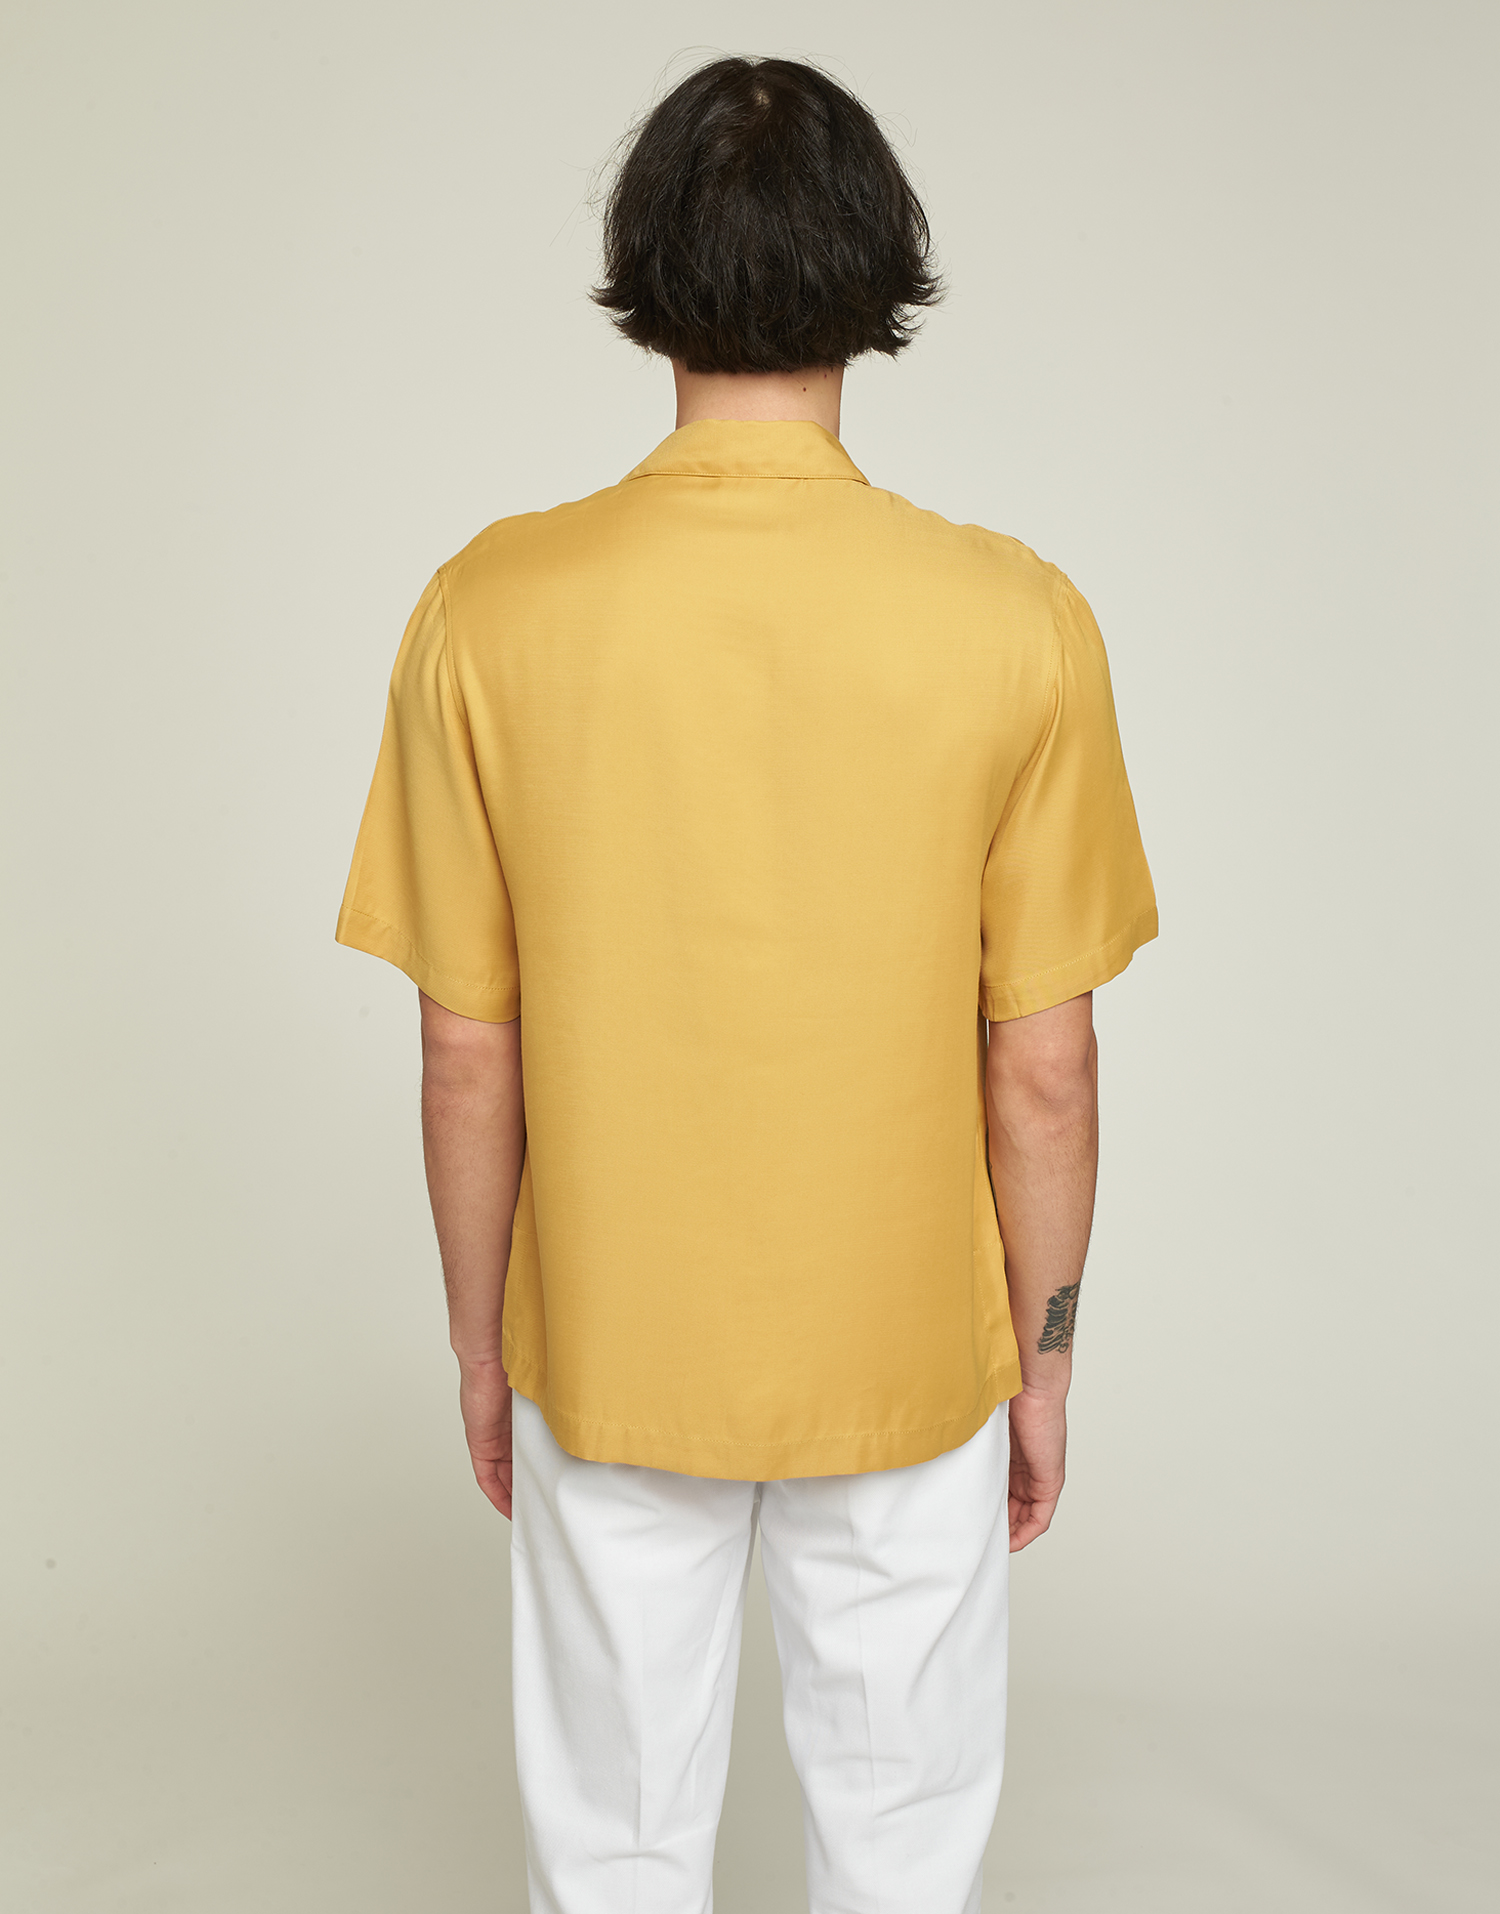 【WISM購入】Portuguese Rayon S/S Shirt Lサイズ